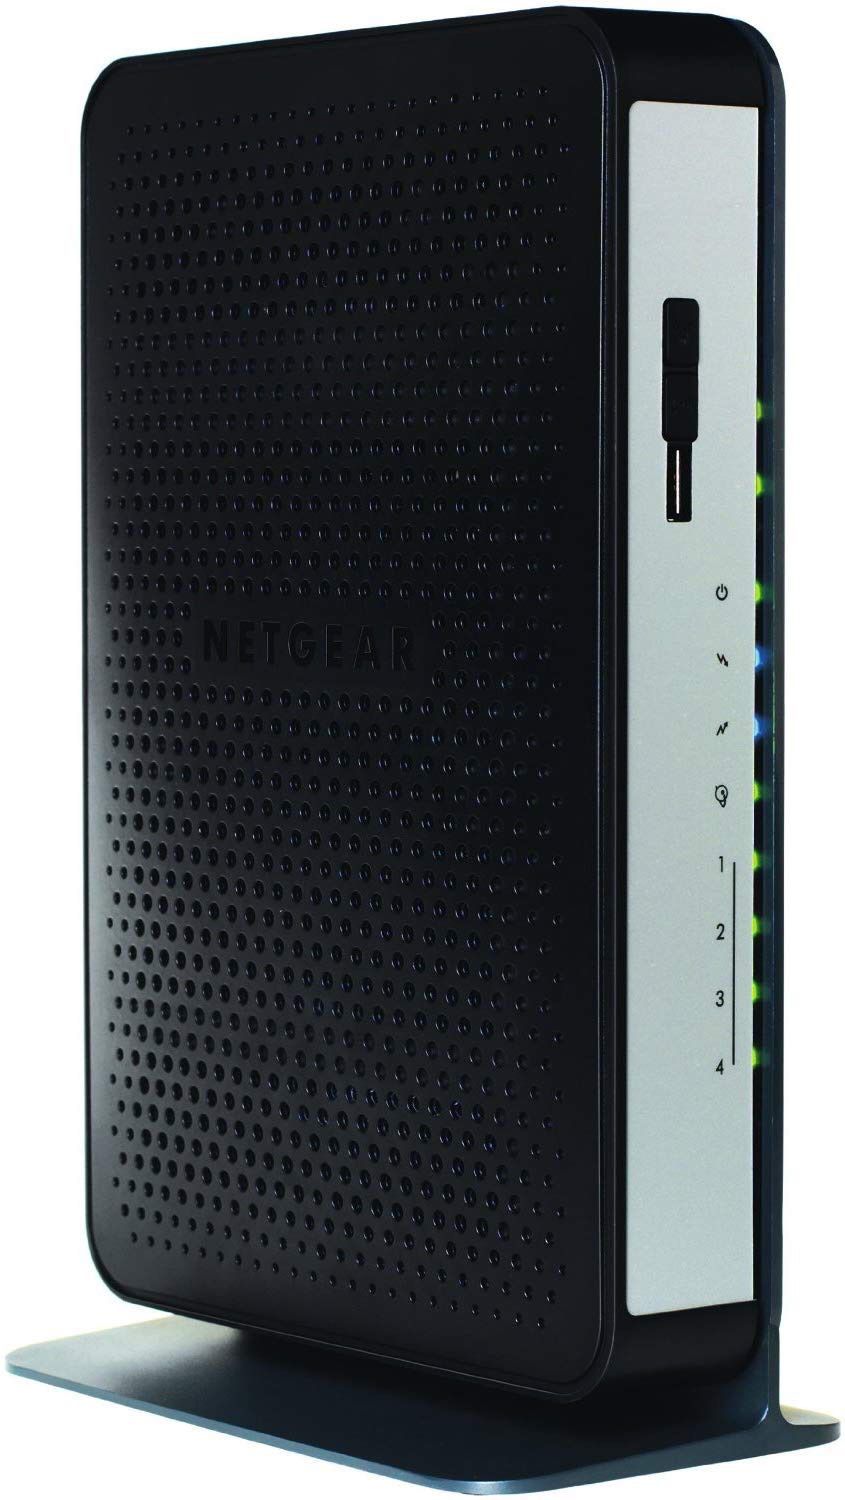 NETGEAR N450 Modem and Router